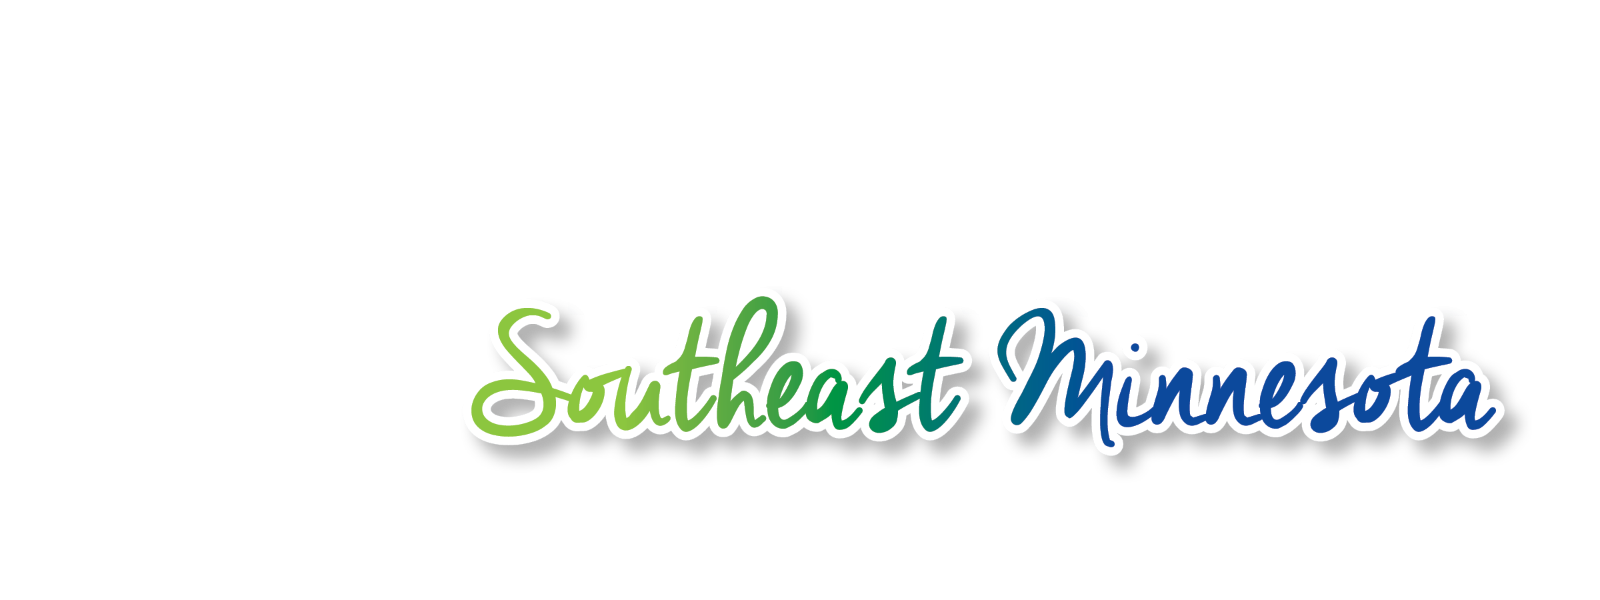 NAMIWalks SE MN logo - white